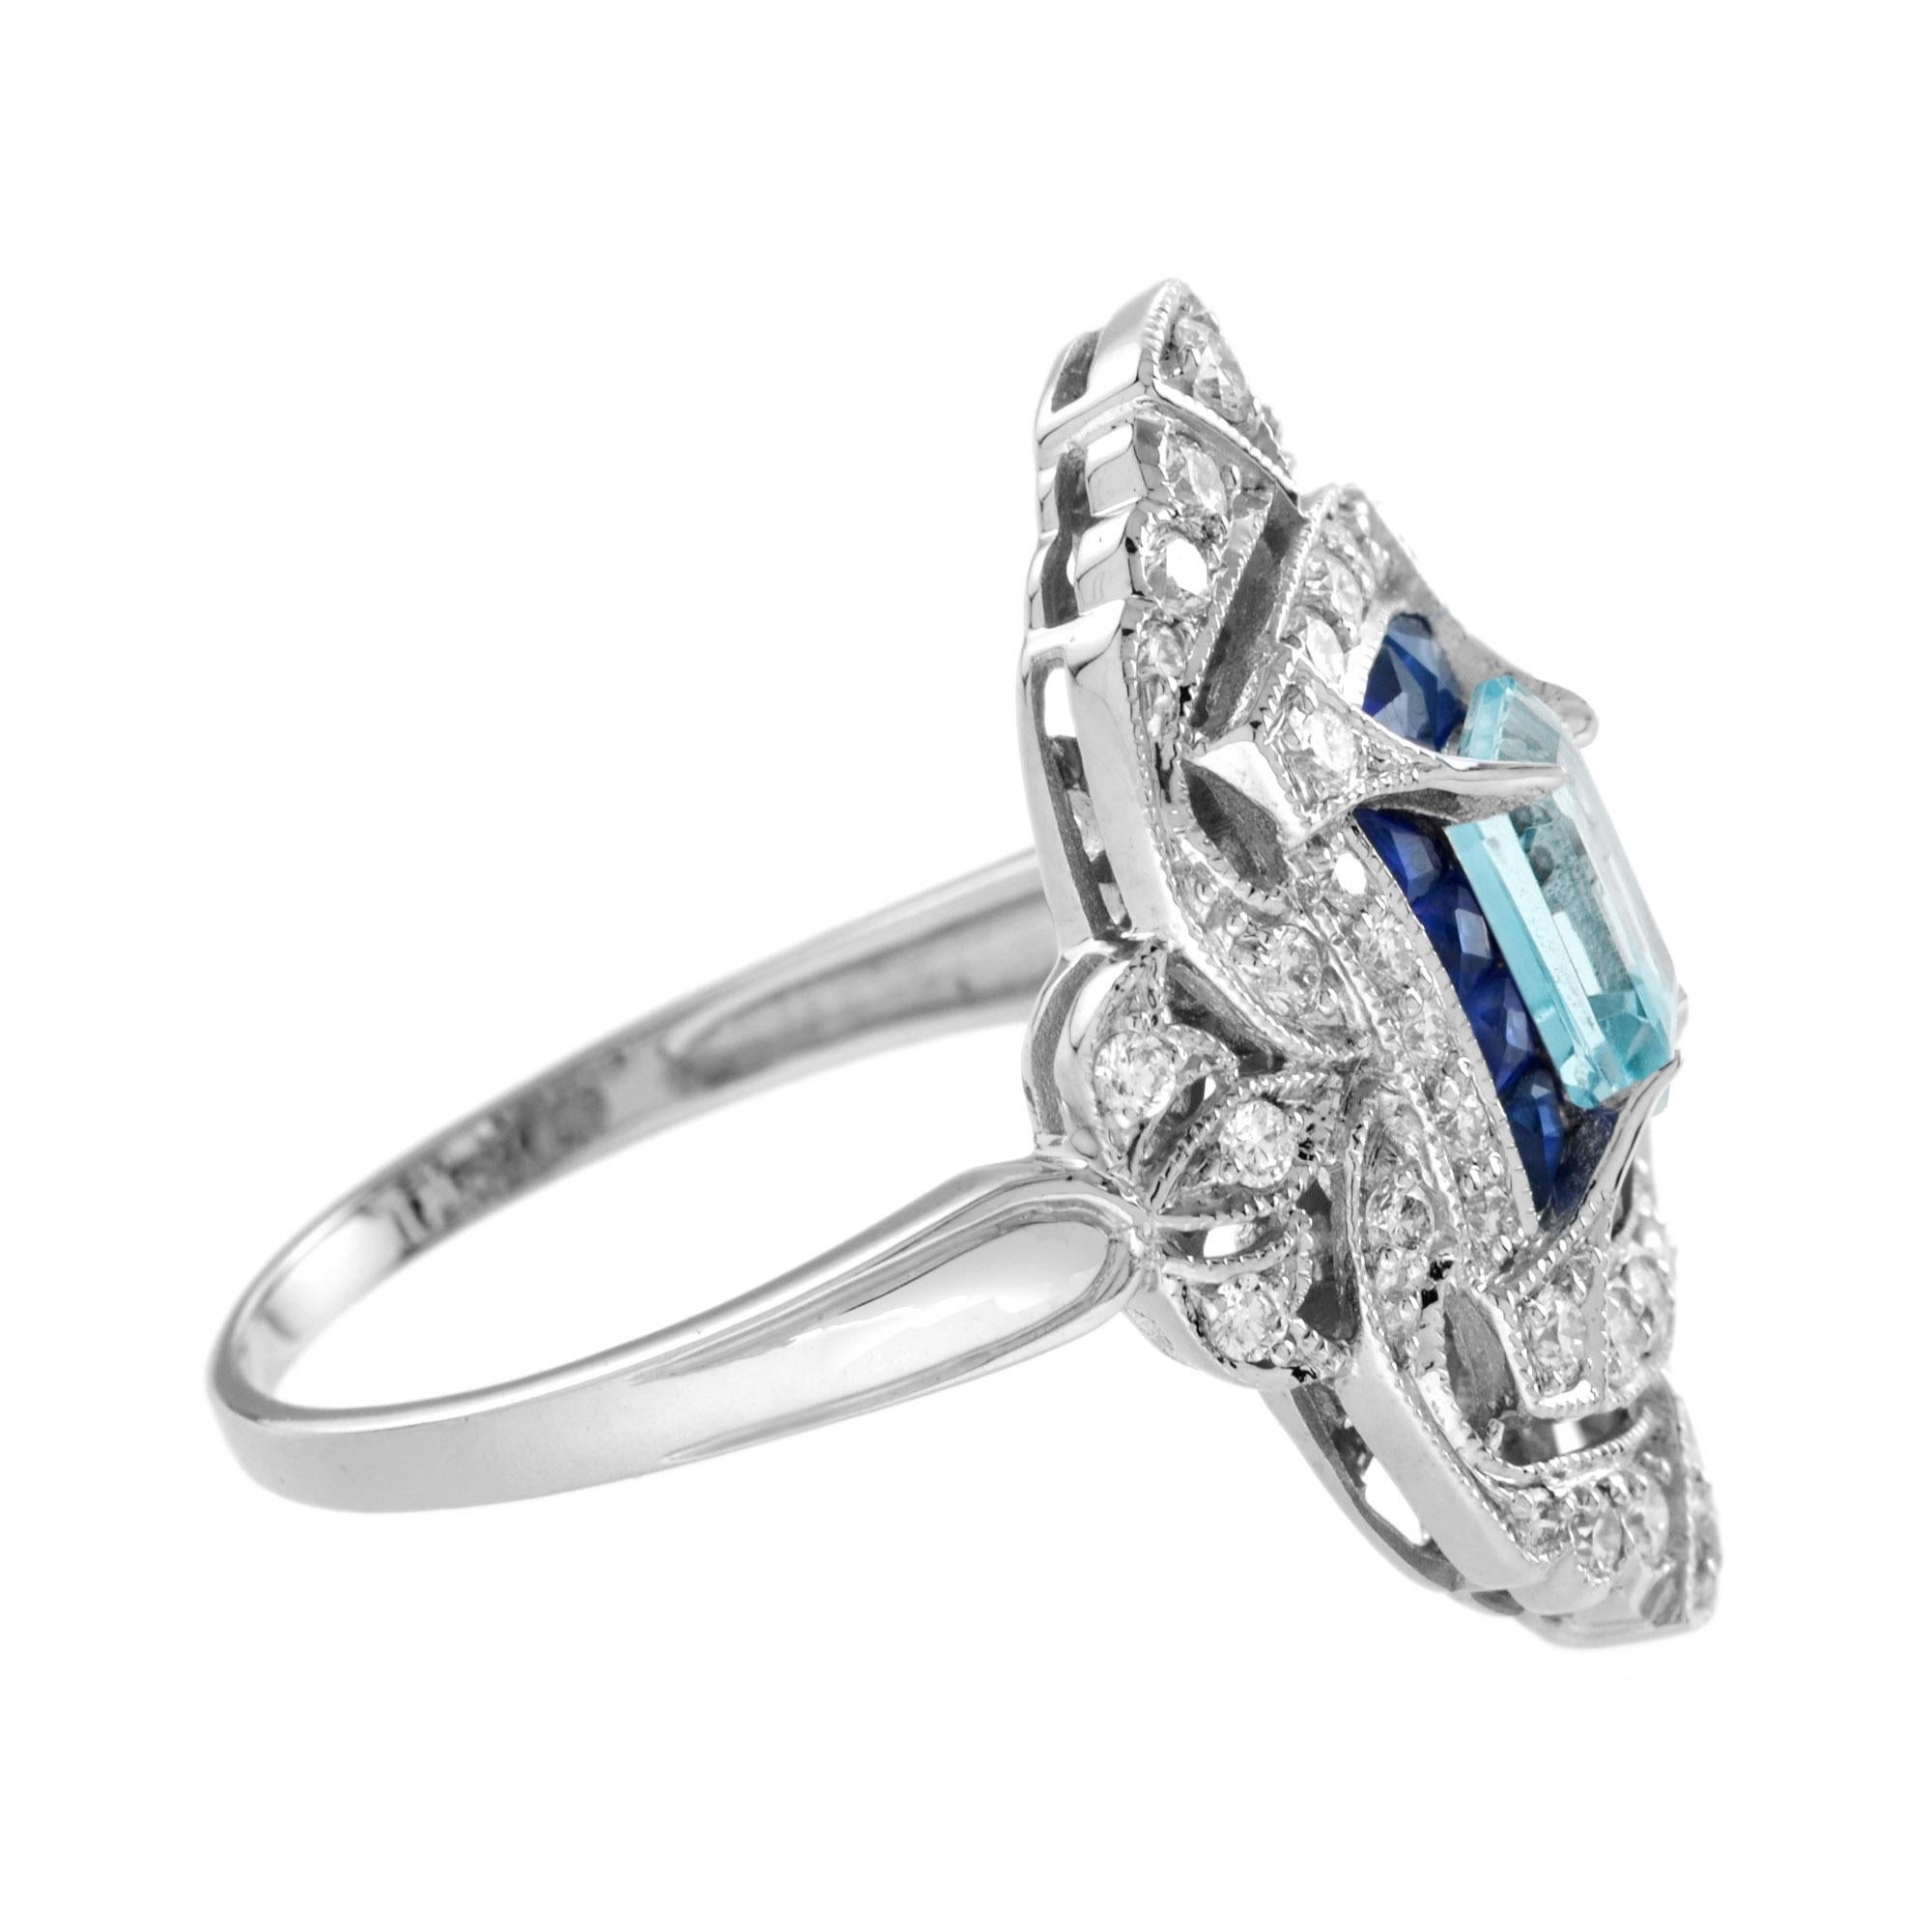 For Sale:  Aquamarine Blue Sapphire Diamond Art Deco Style Dinner Ring in 18K White Gold 4